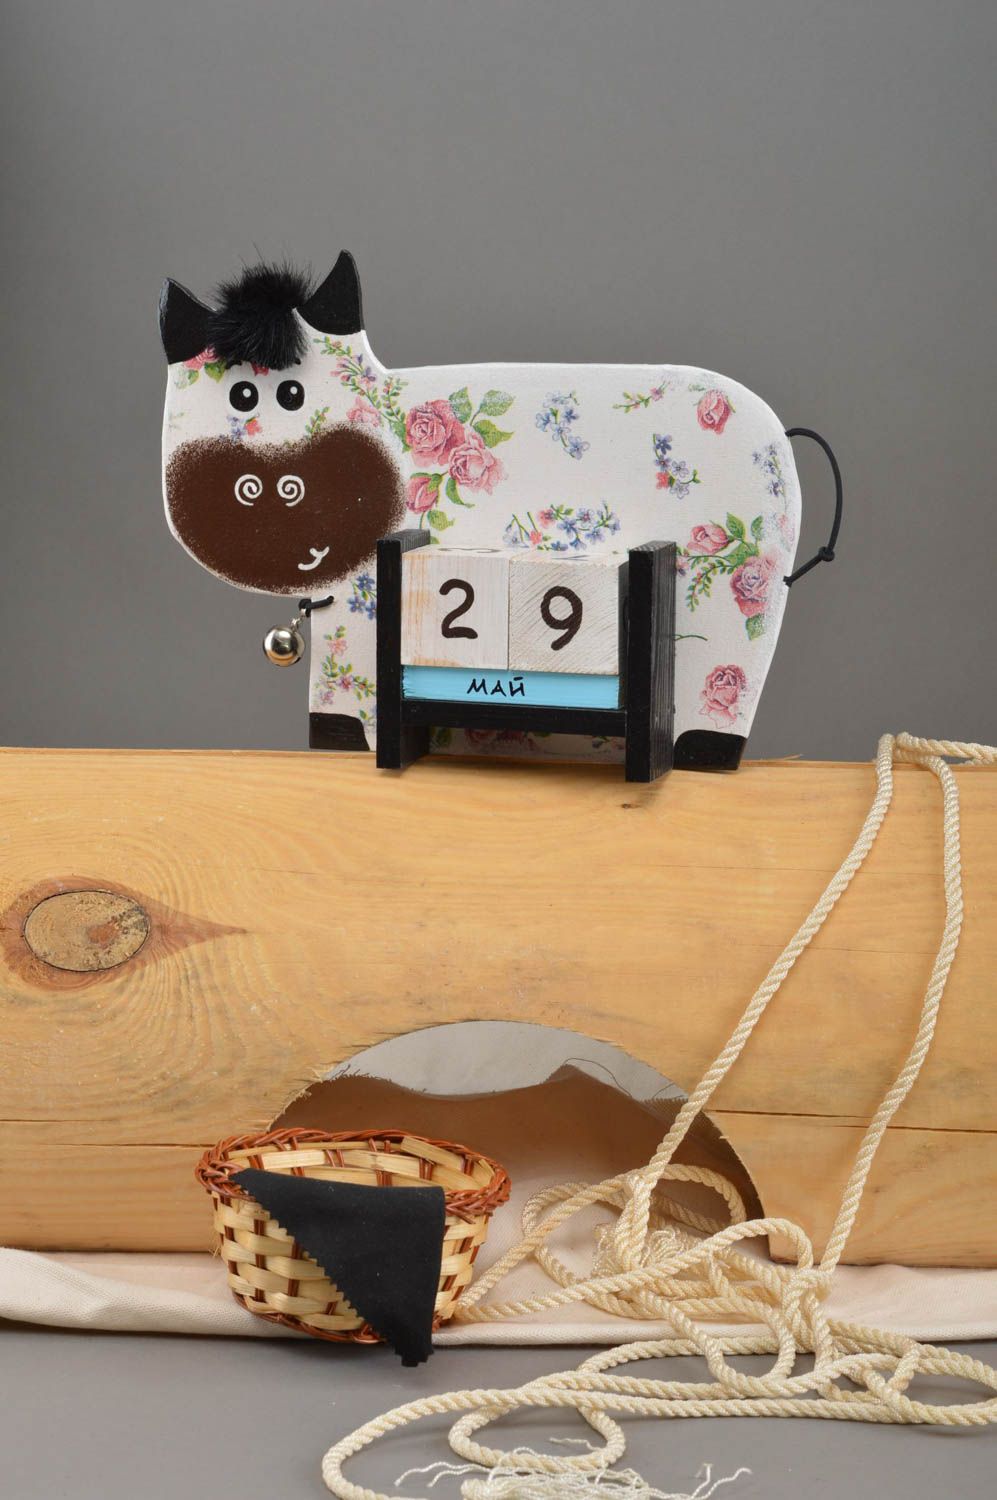 Handmade calendar for kids unusual cow figurine stylish table decor ideas photo 1